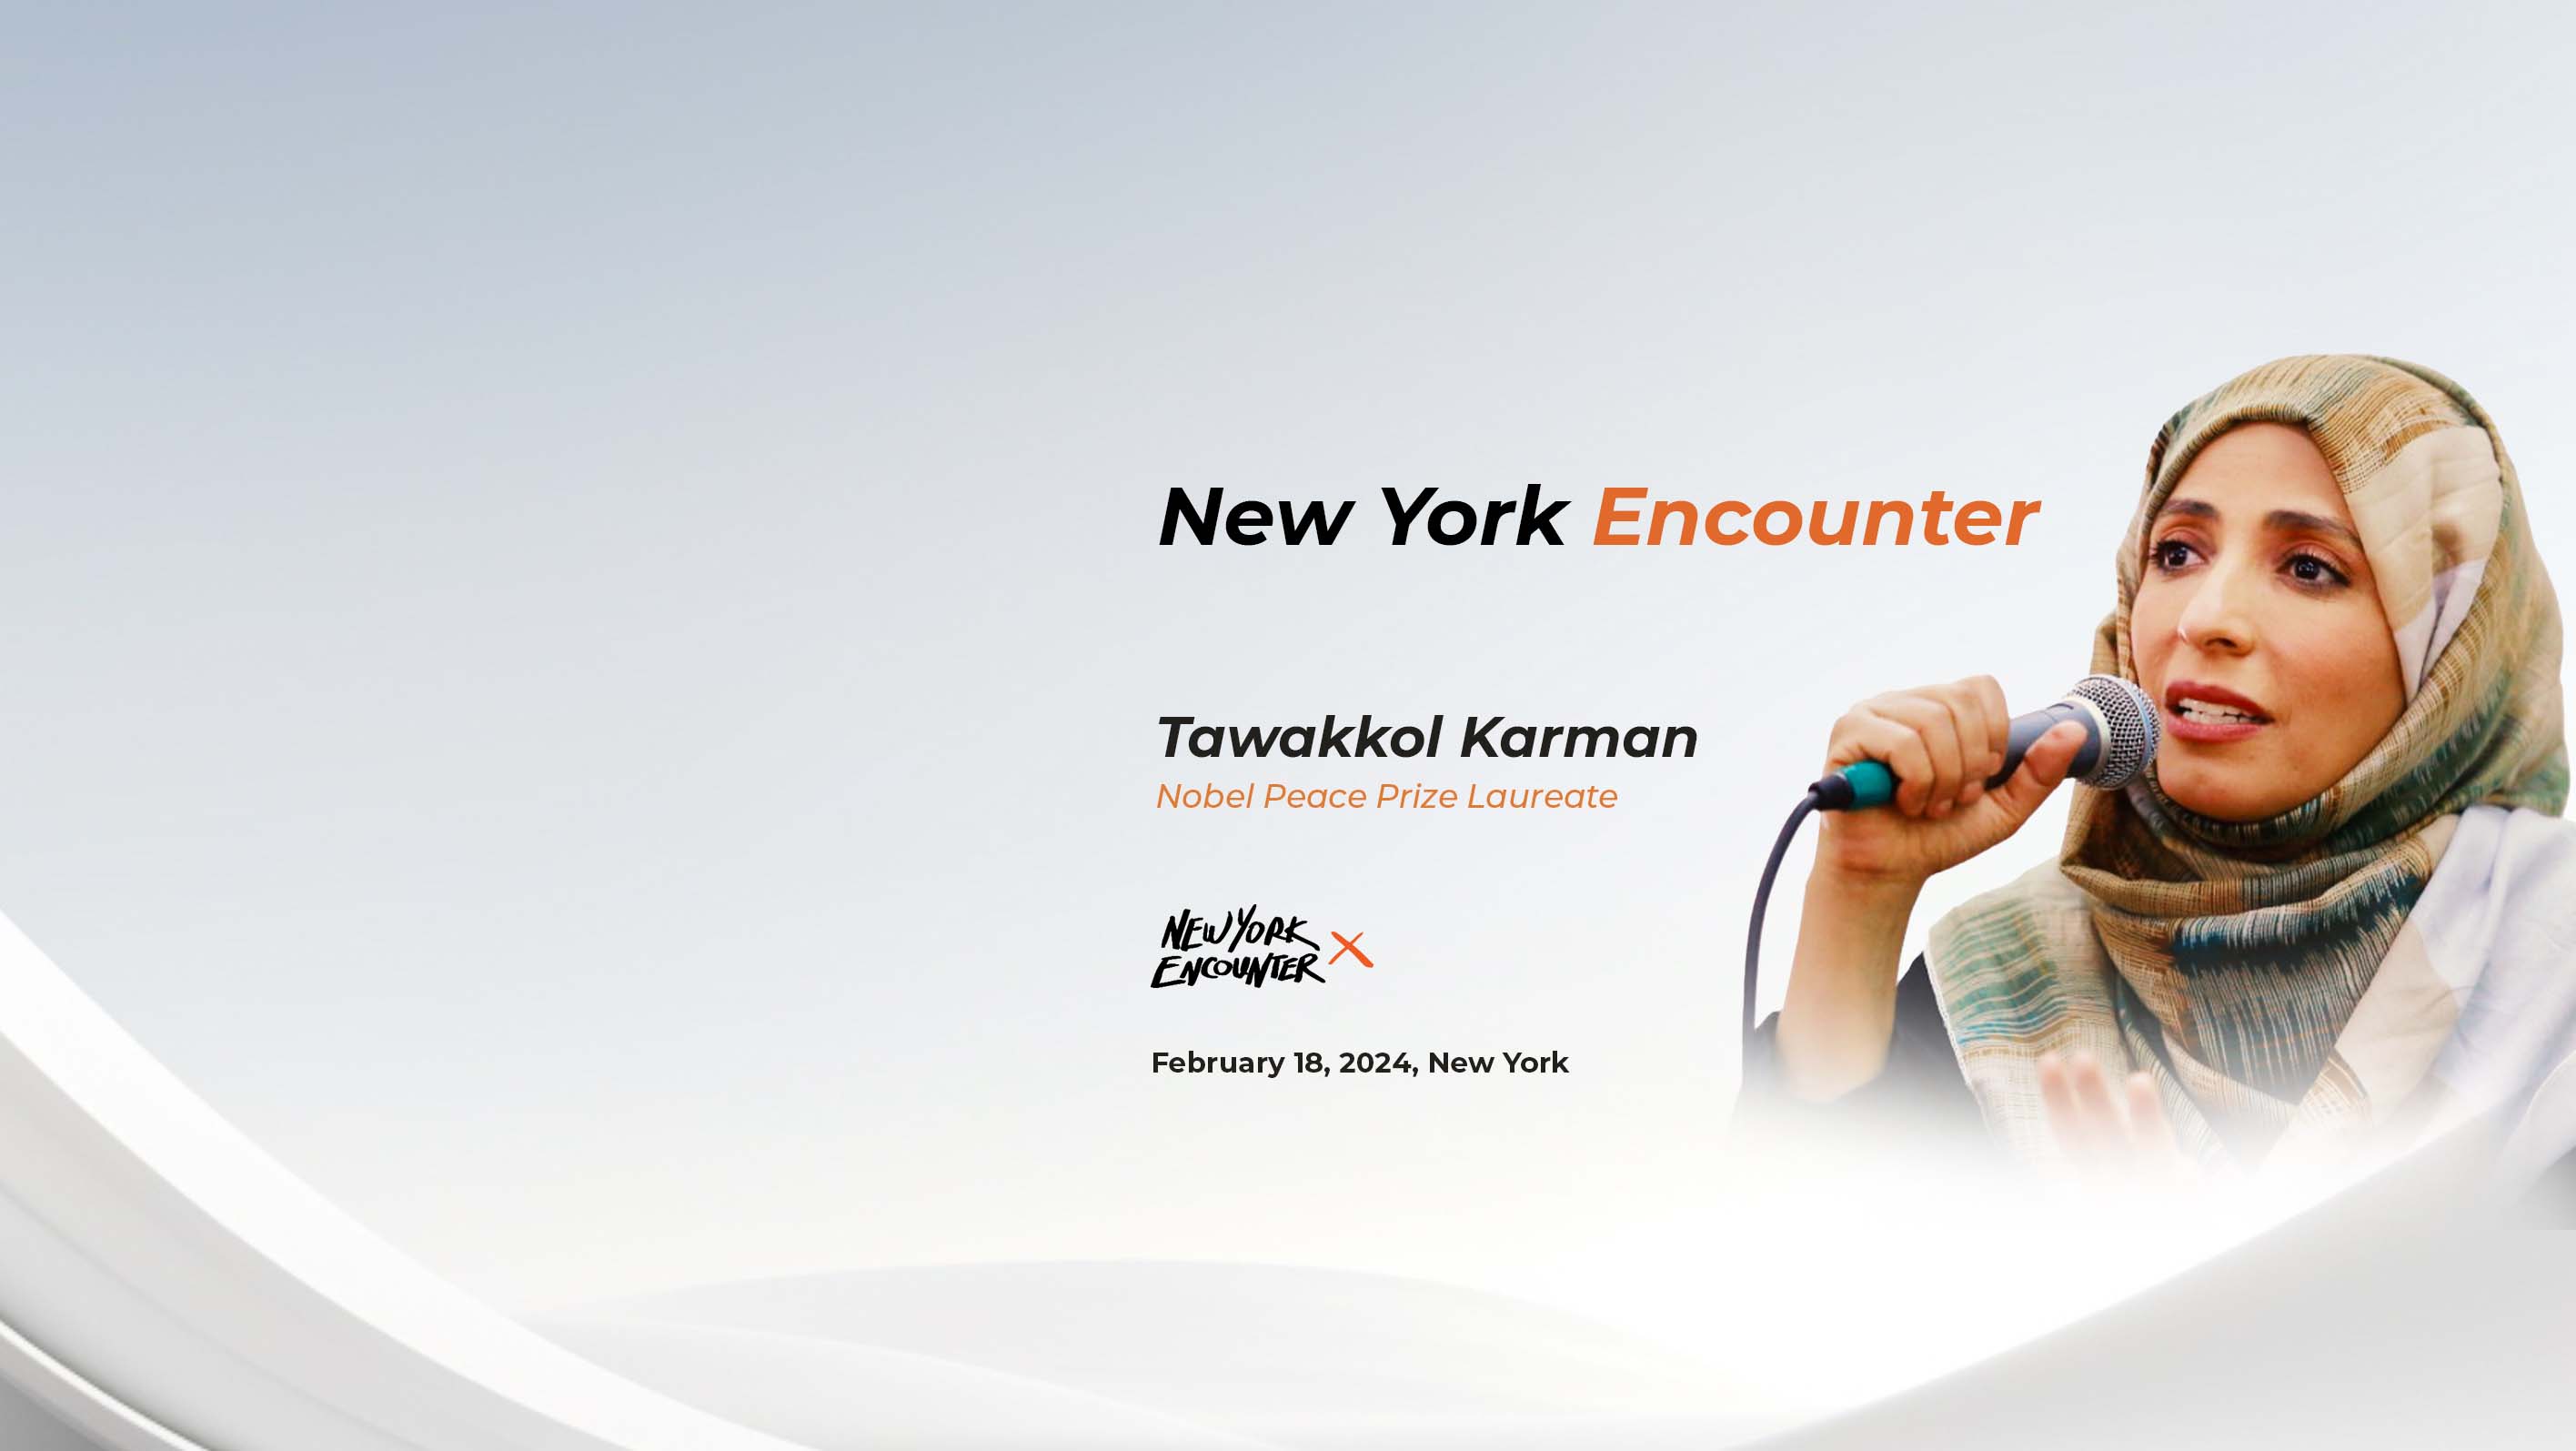 Tawakkol Karman to join discussion on Pope Francis' encyclical "Fratelli Tutti" in Washington D.C.